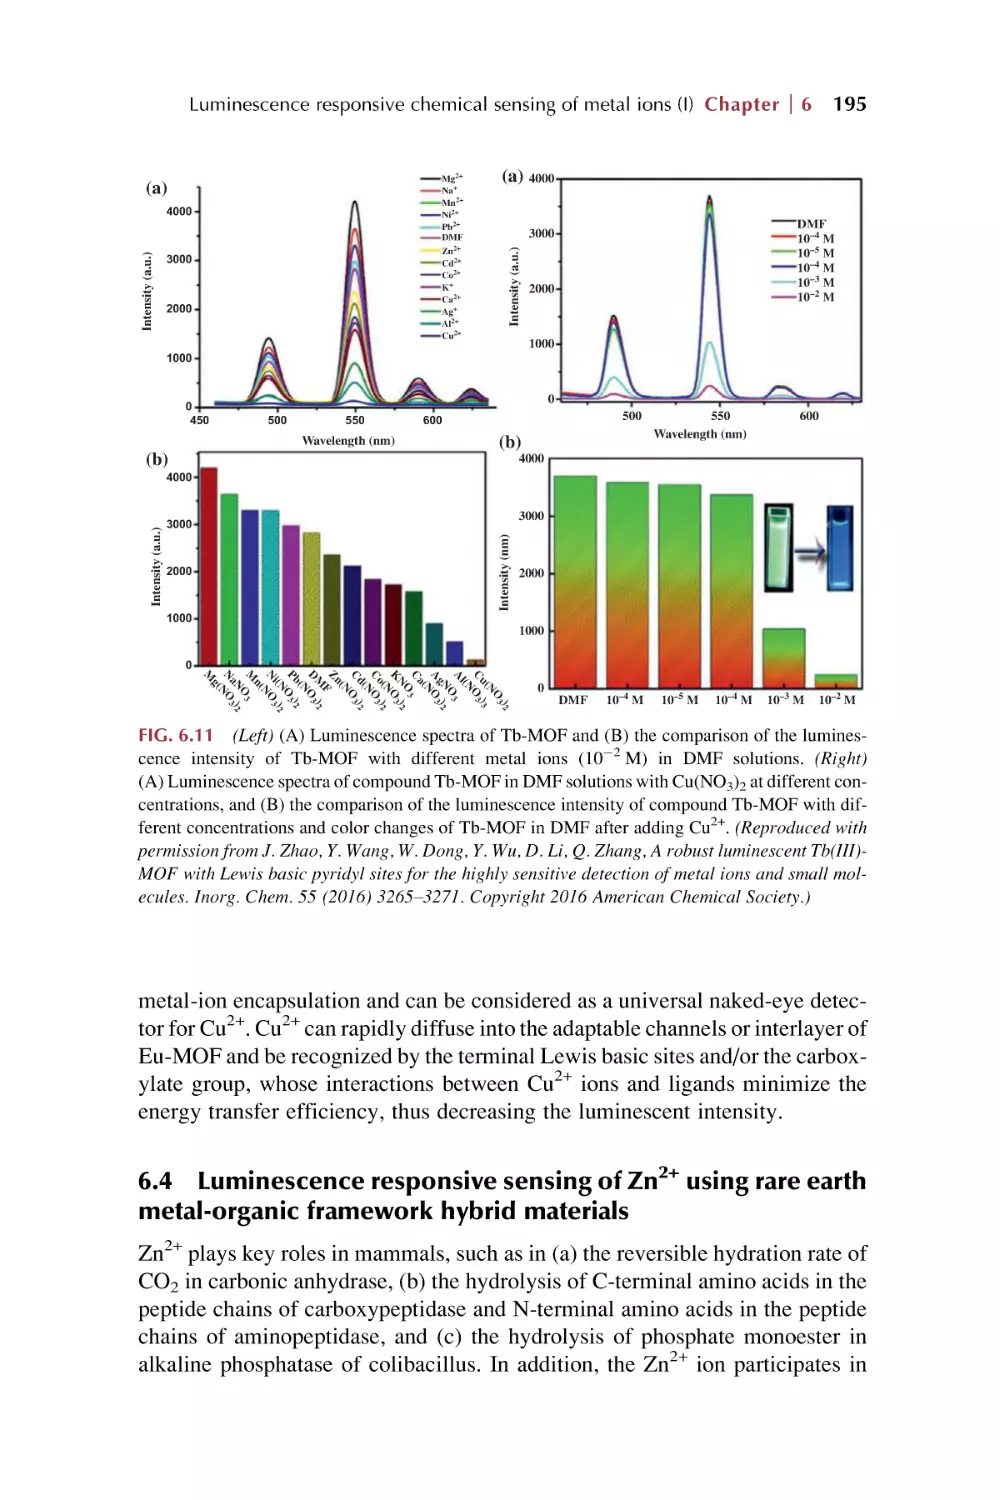 6.4. Luminescence responsive sensing of Zn2+ using rare earth metal-organic framework hybrid materials